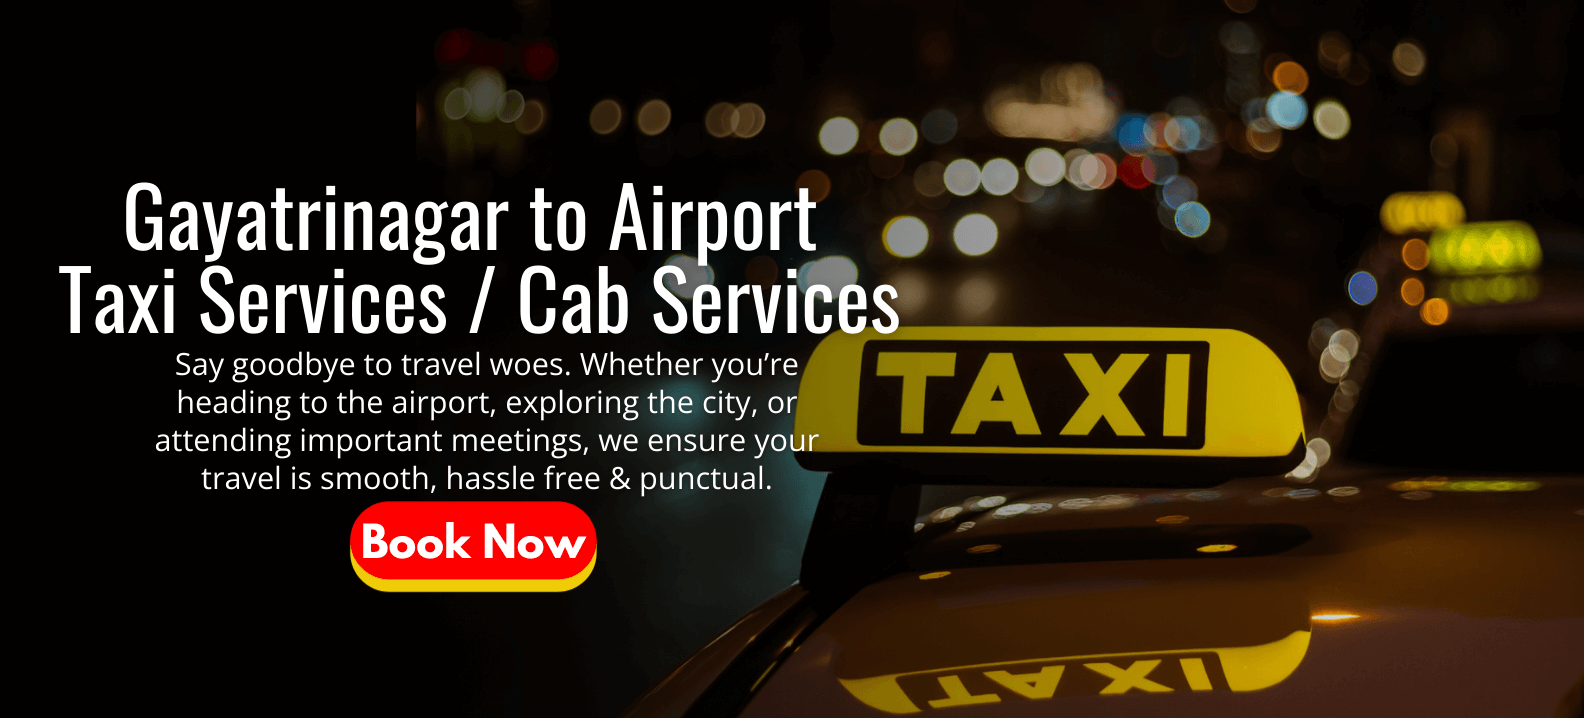 Gayatrinagar to Airport Taxi Services Cab Services